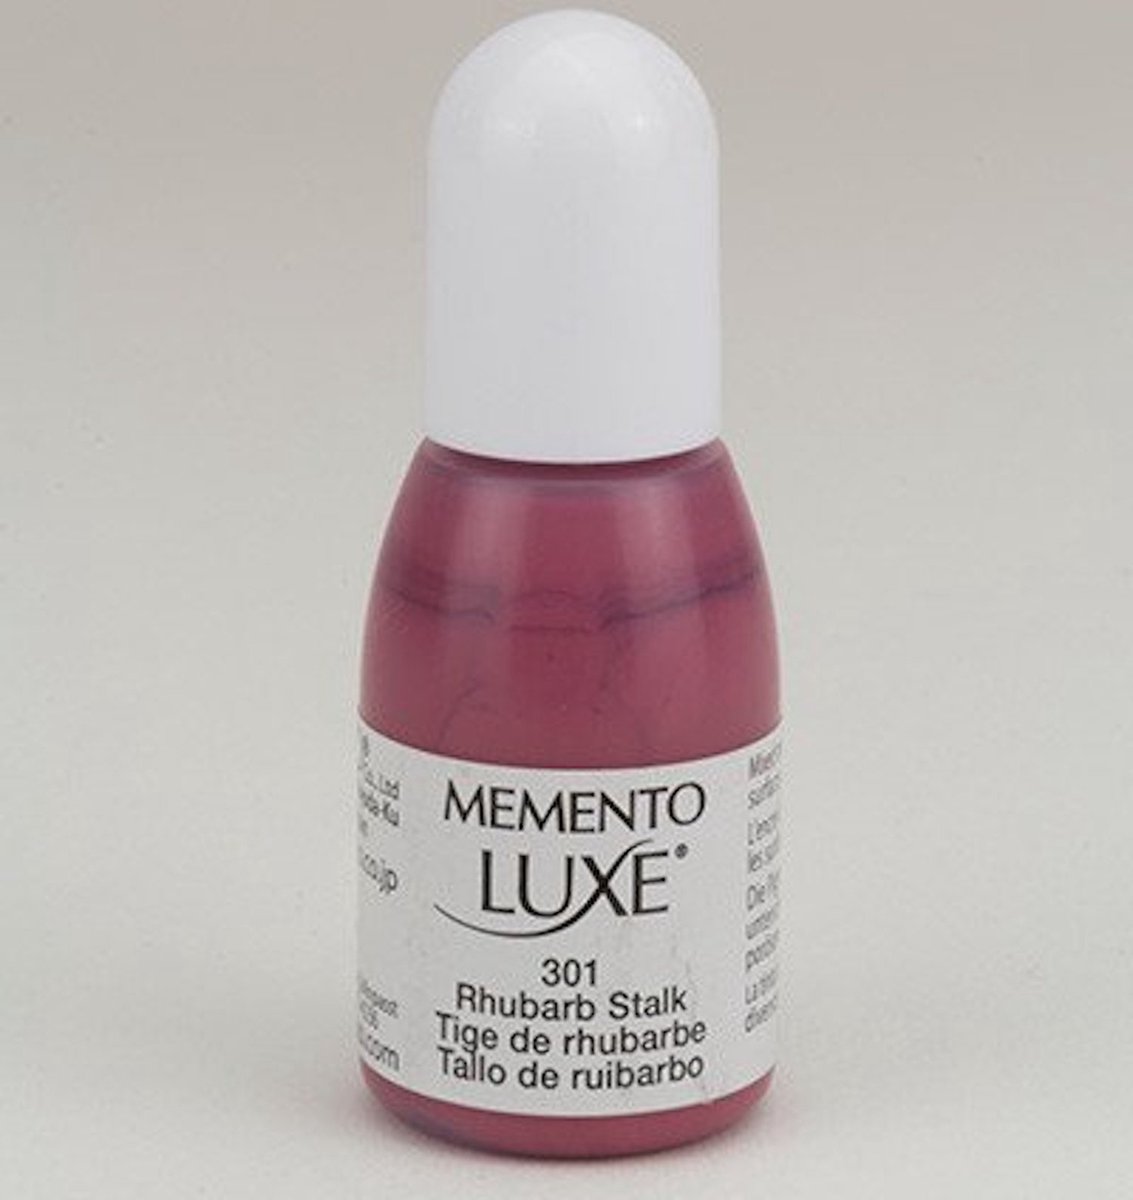 ML-301 - Memento luxe navulling - refill -15 ml - rhubarb stalk - donker kerst rood